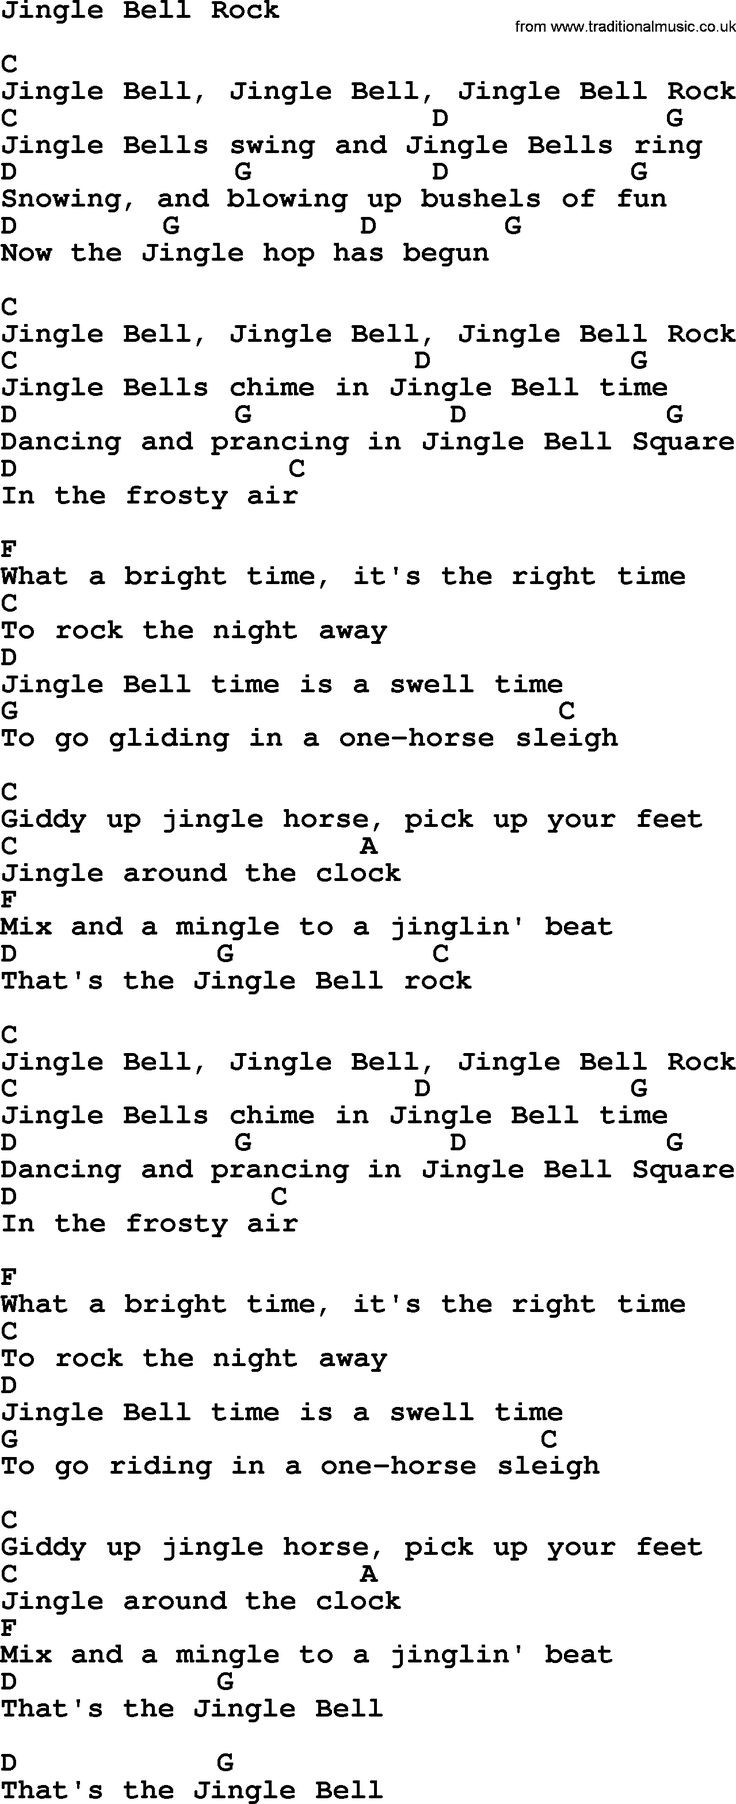 George Strait Christmas Cookies Lyrics
 George Strait song Jingle Bell Rock lyrics and chords